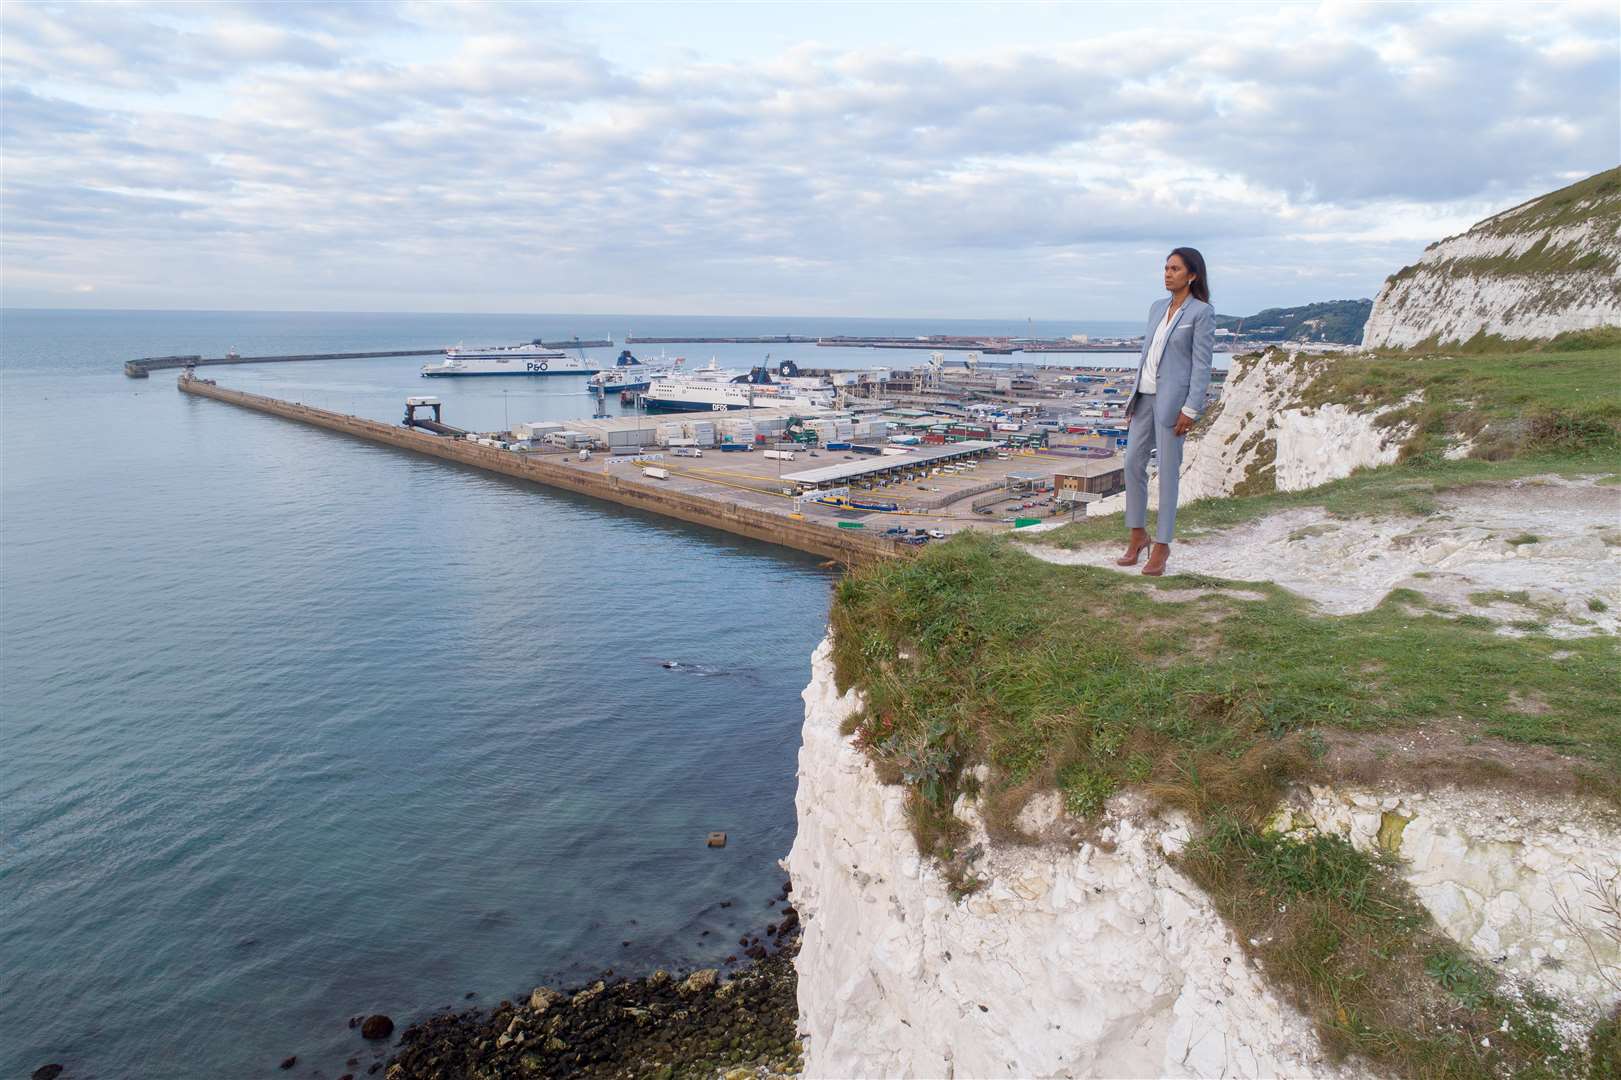 Gina Miller on the White Cliffs of Dover